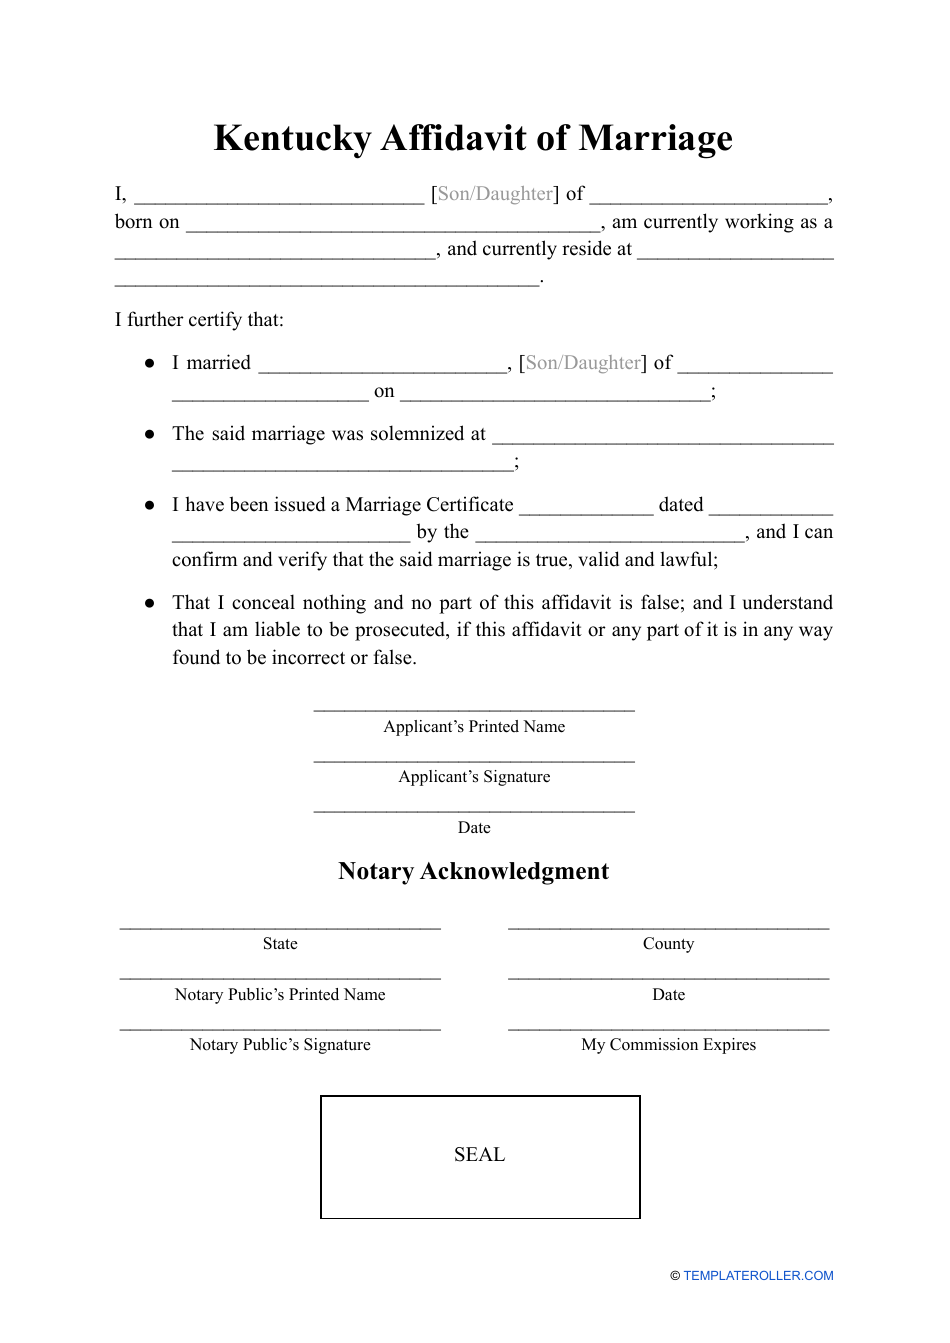 Affidavit of Marriage - Kentucky, Page 1